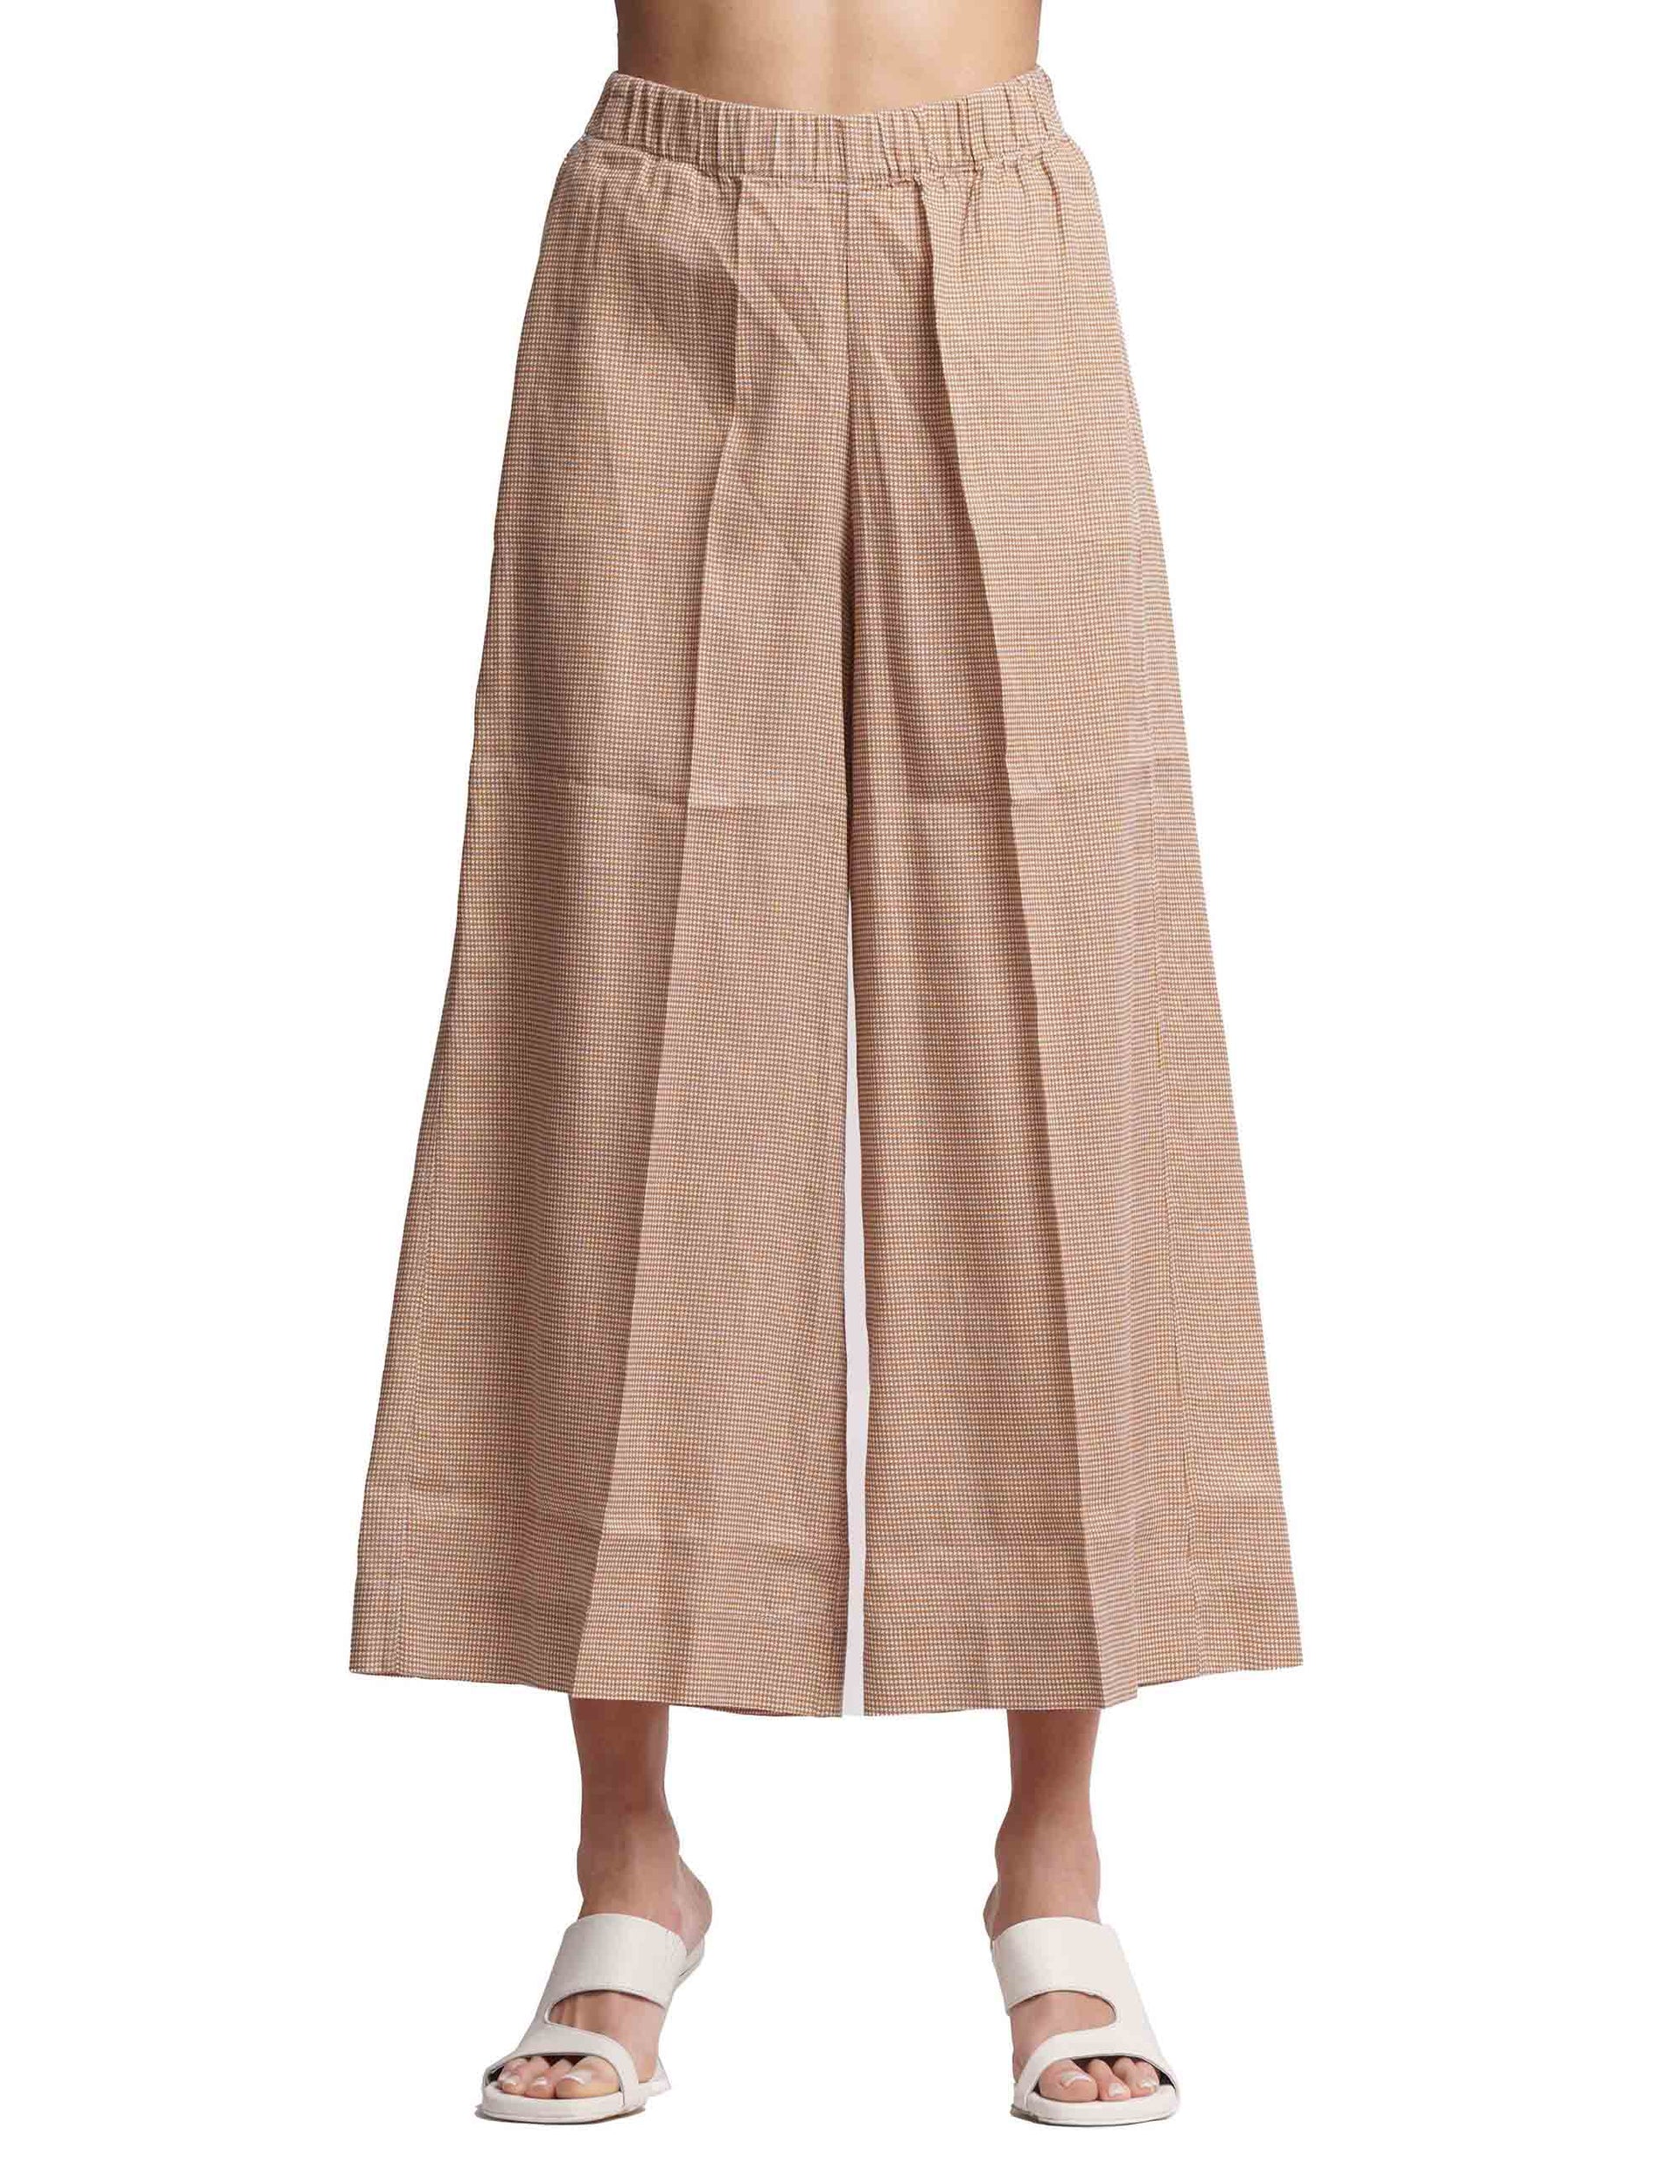 Women's wide-leg camel pure linen trousers with elastic waist